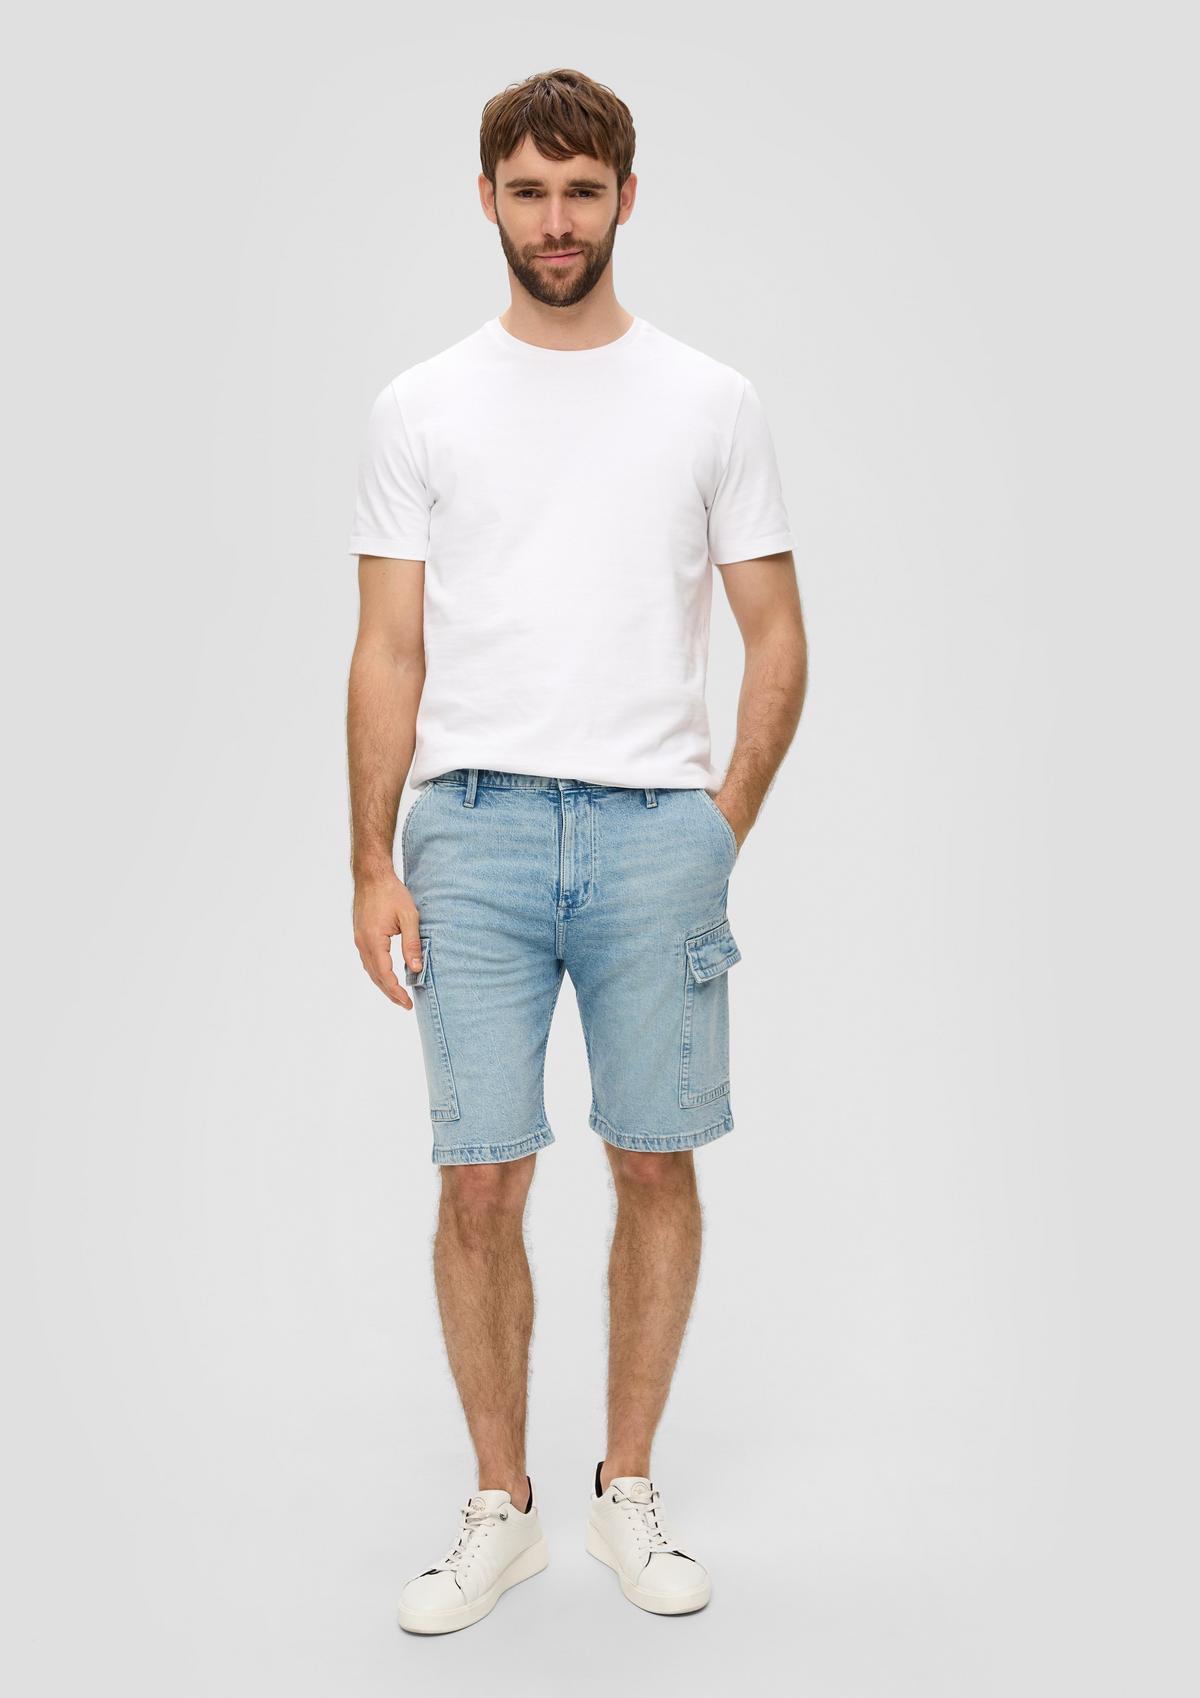 Denim shorts / regular fit / high rise / straight leg / cargo pockets